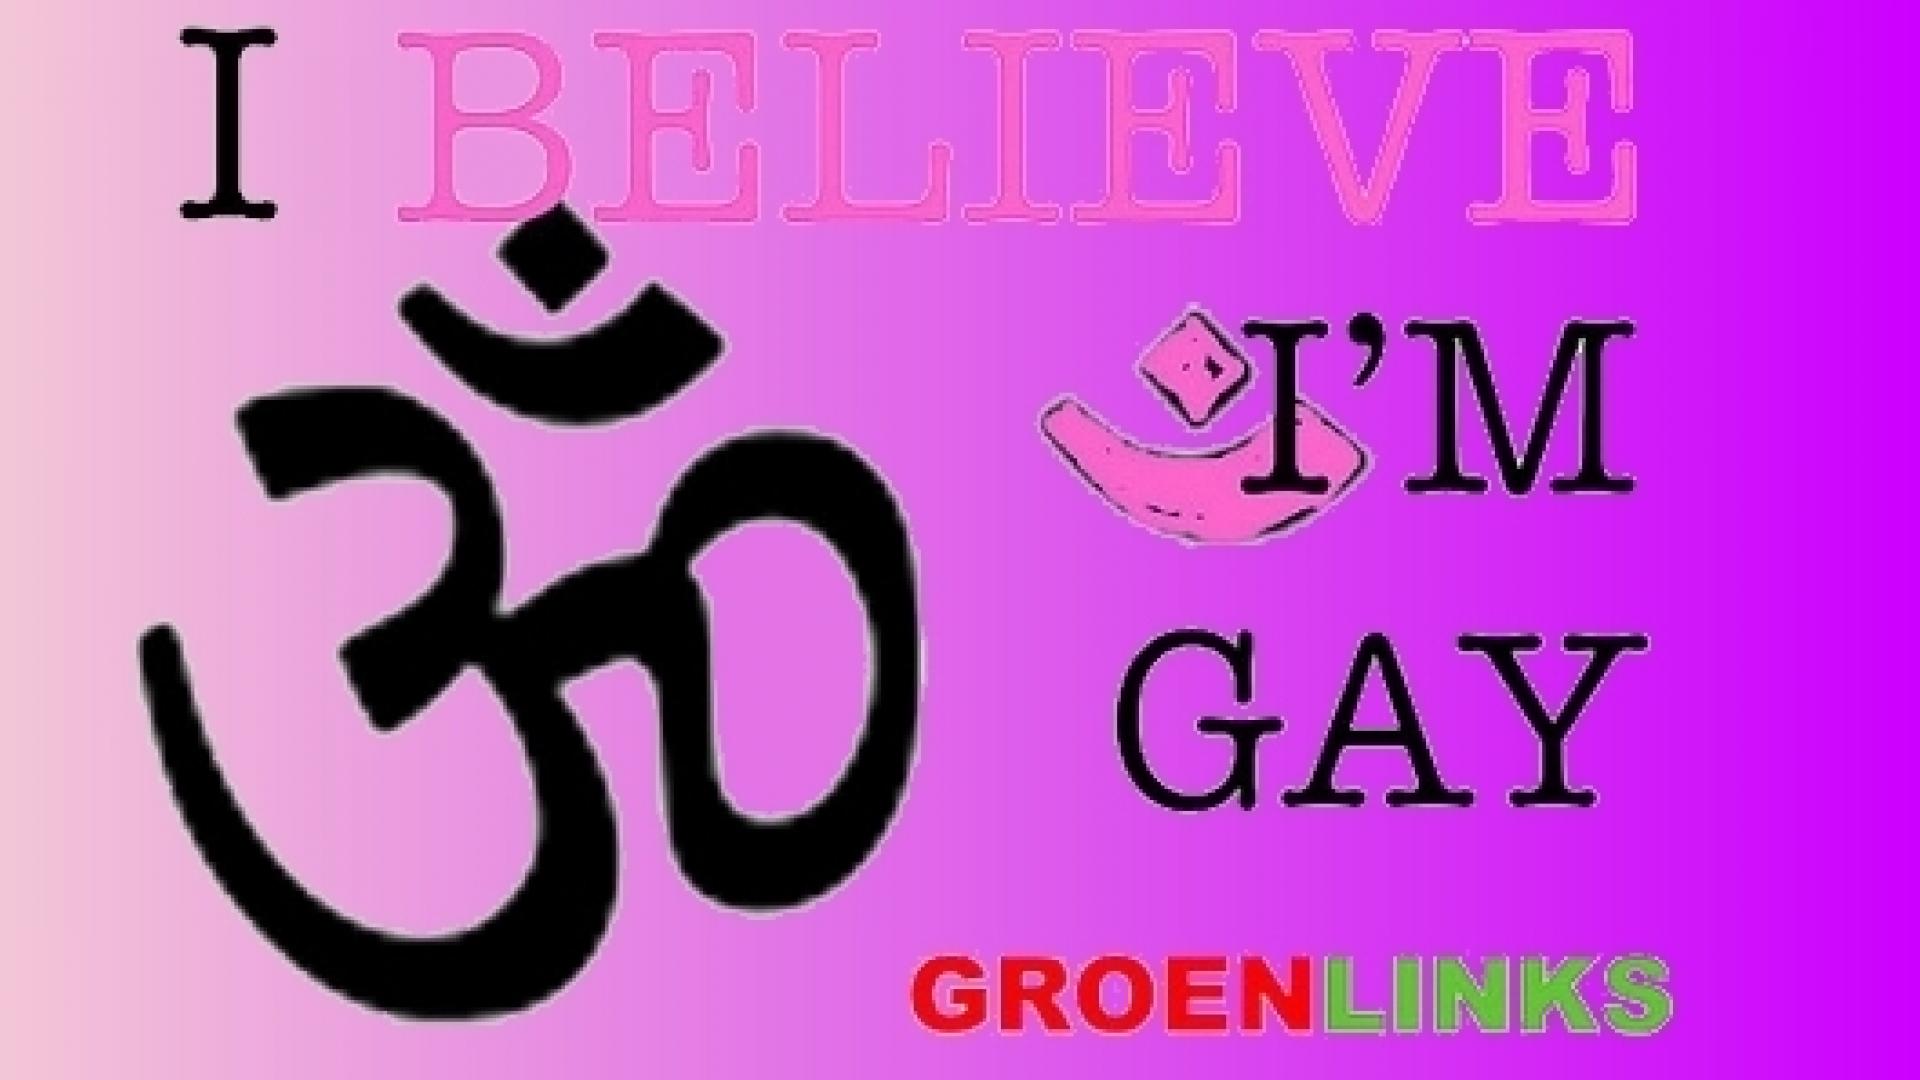 Arabische tekst en Engelse tekst I believe /  I'm gay